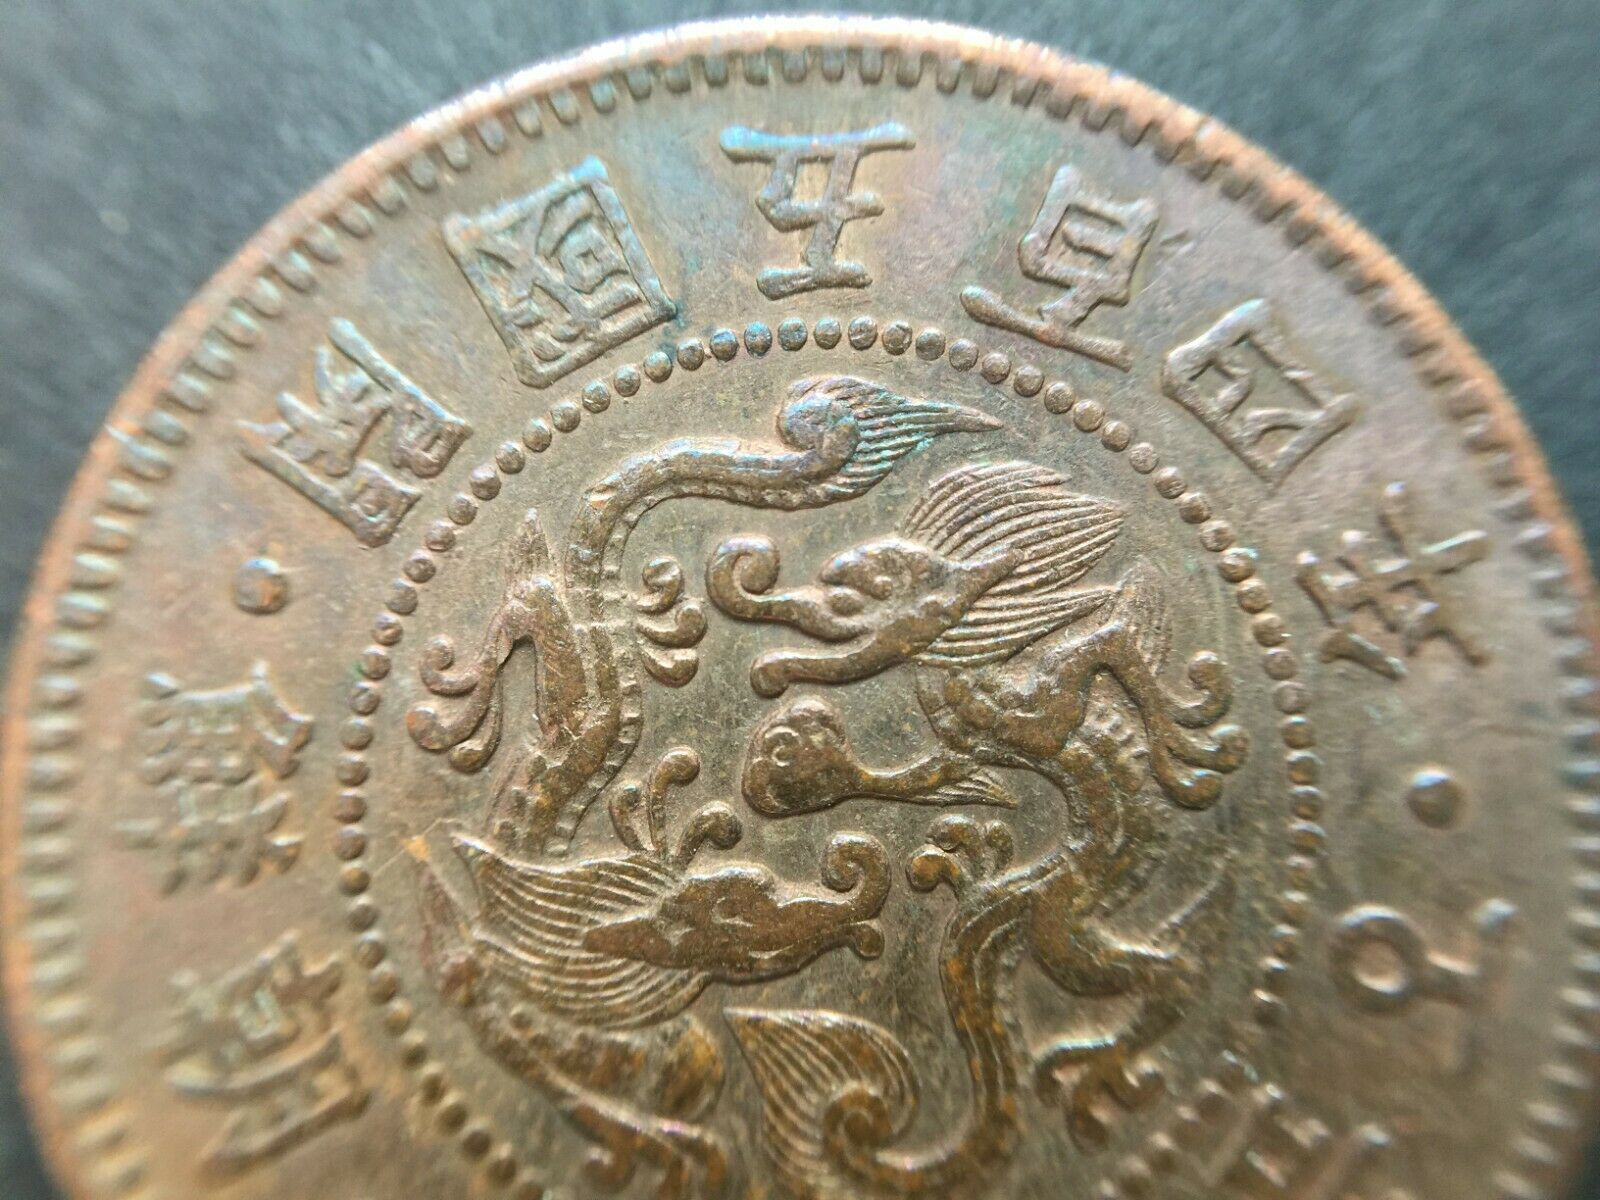 1895 Korea 5 Fun Coin. Year 504 朝鮮開國五百四年 Rare Version "朝鮮" 2 Characters